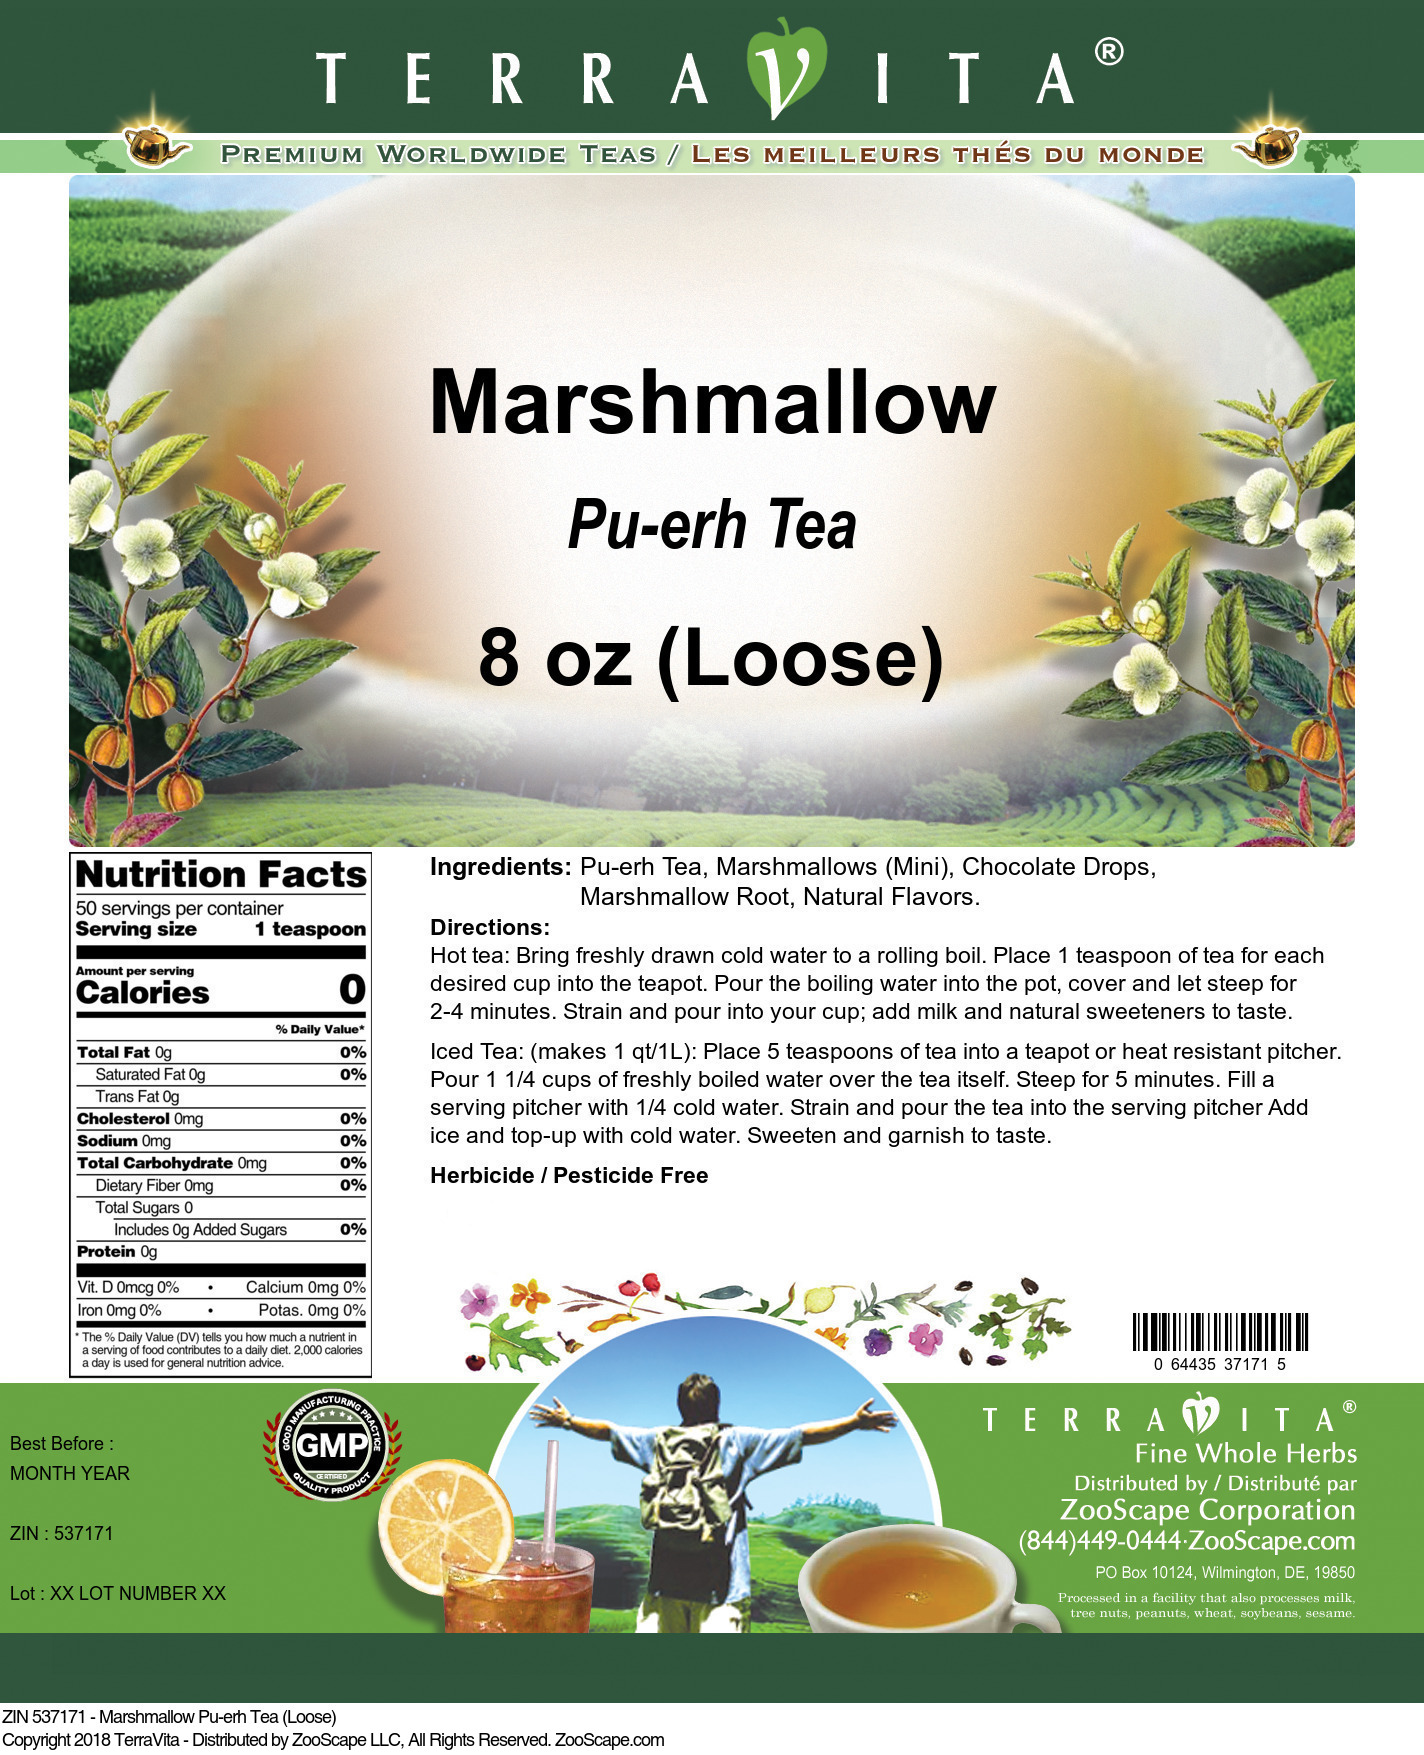 Marshmallow Pu-erh Tea (Loose) - Label